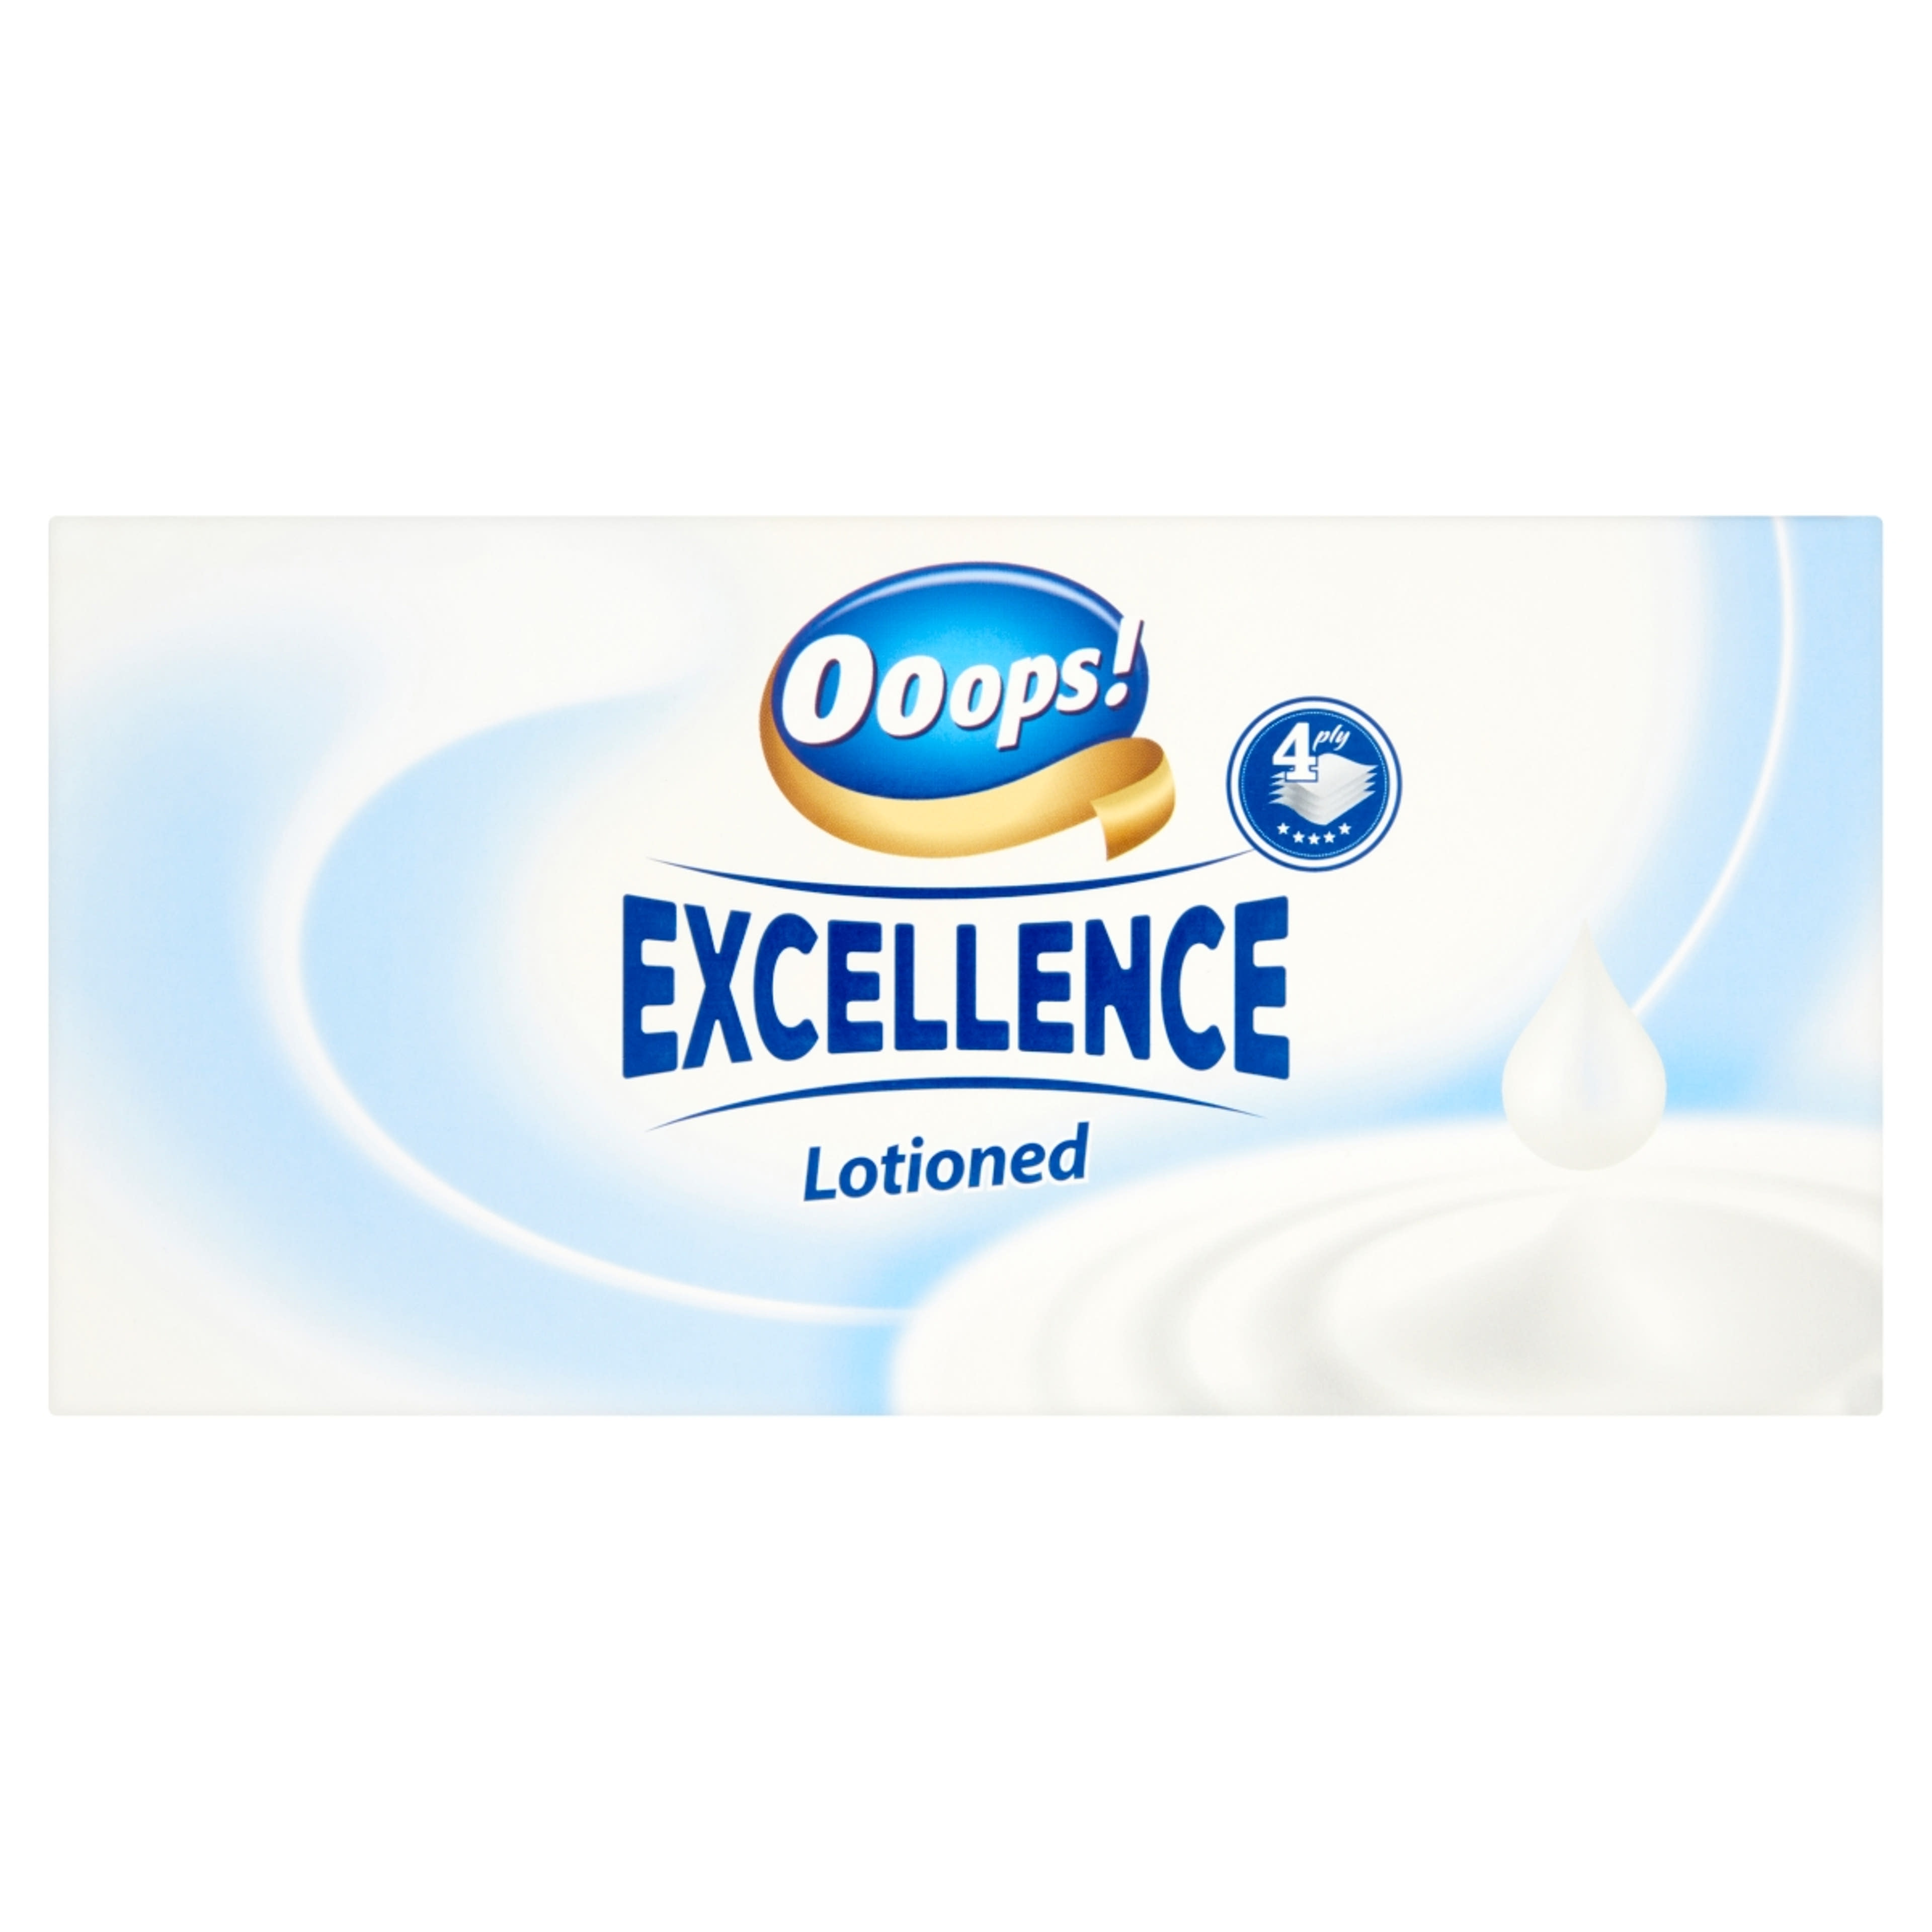 OOOPS! Excellence Lotioned 4 rétegű dobozos papírzsebkendő - 80 db-1